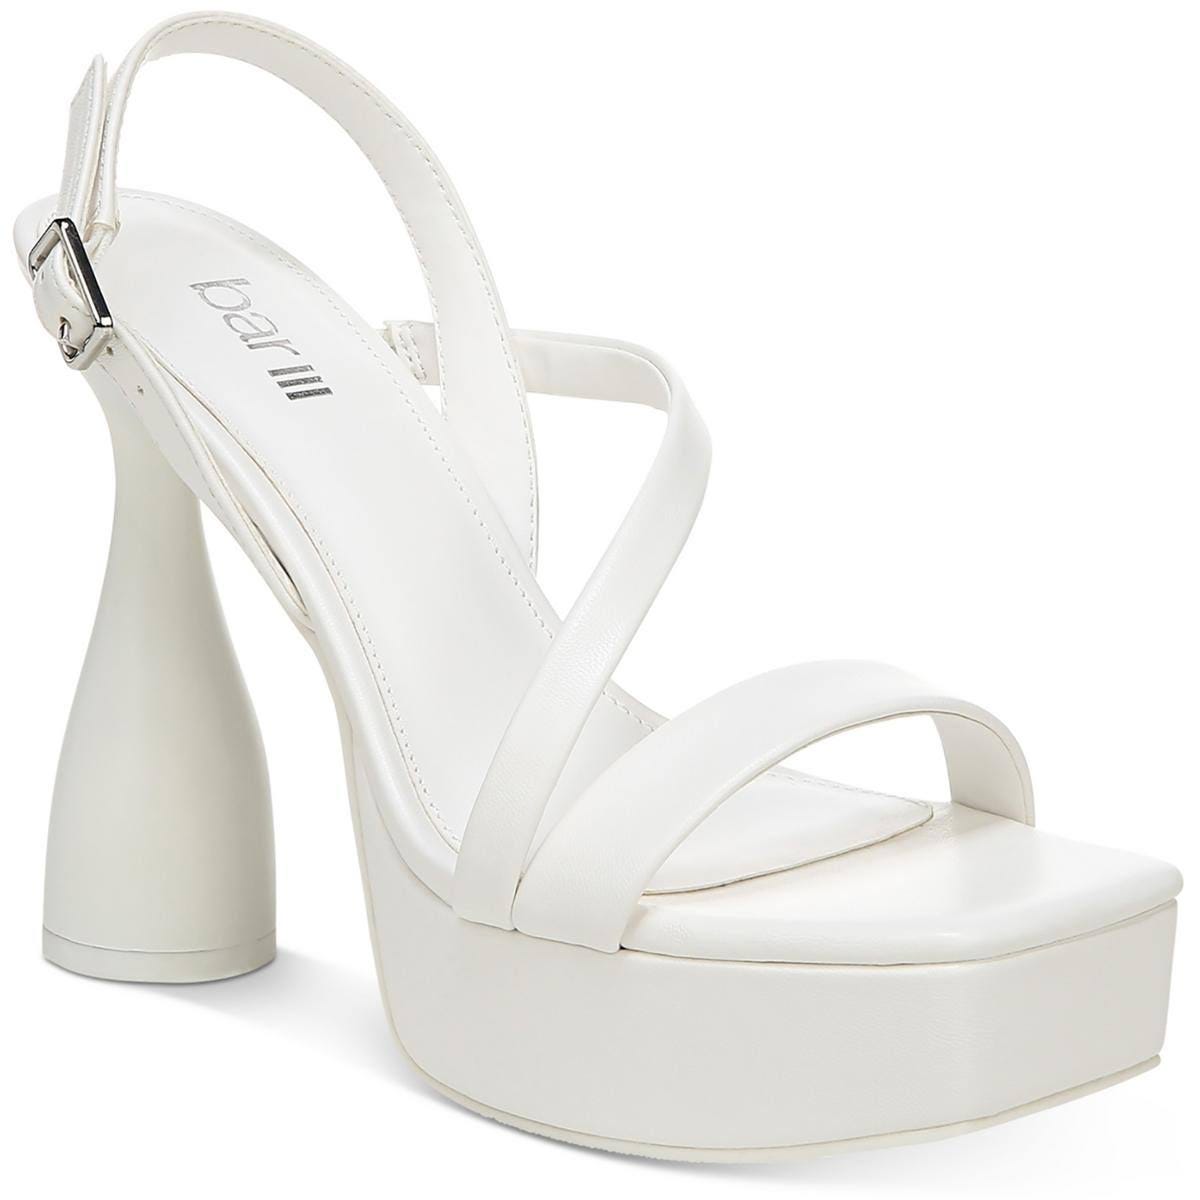 BAR III White Square Toe Heels: Retro Chic Platform Comfort | Image